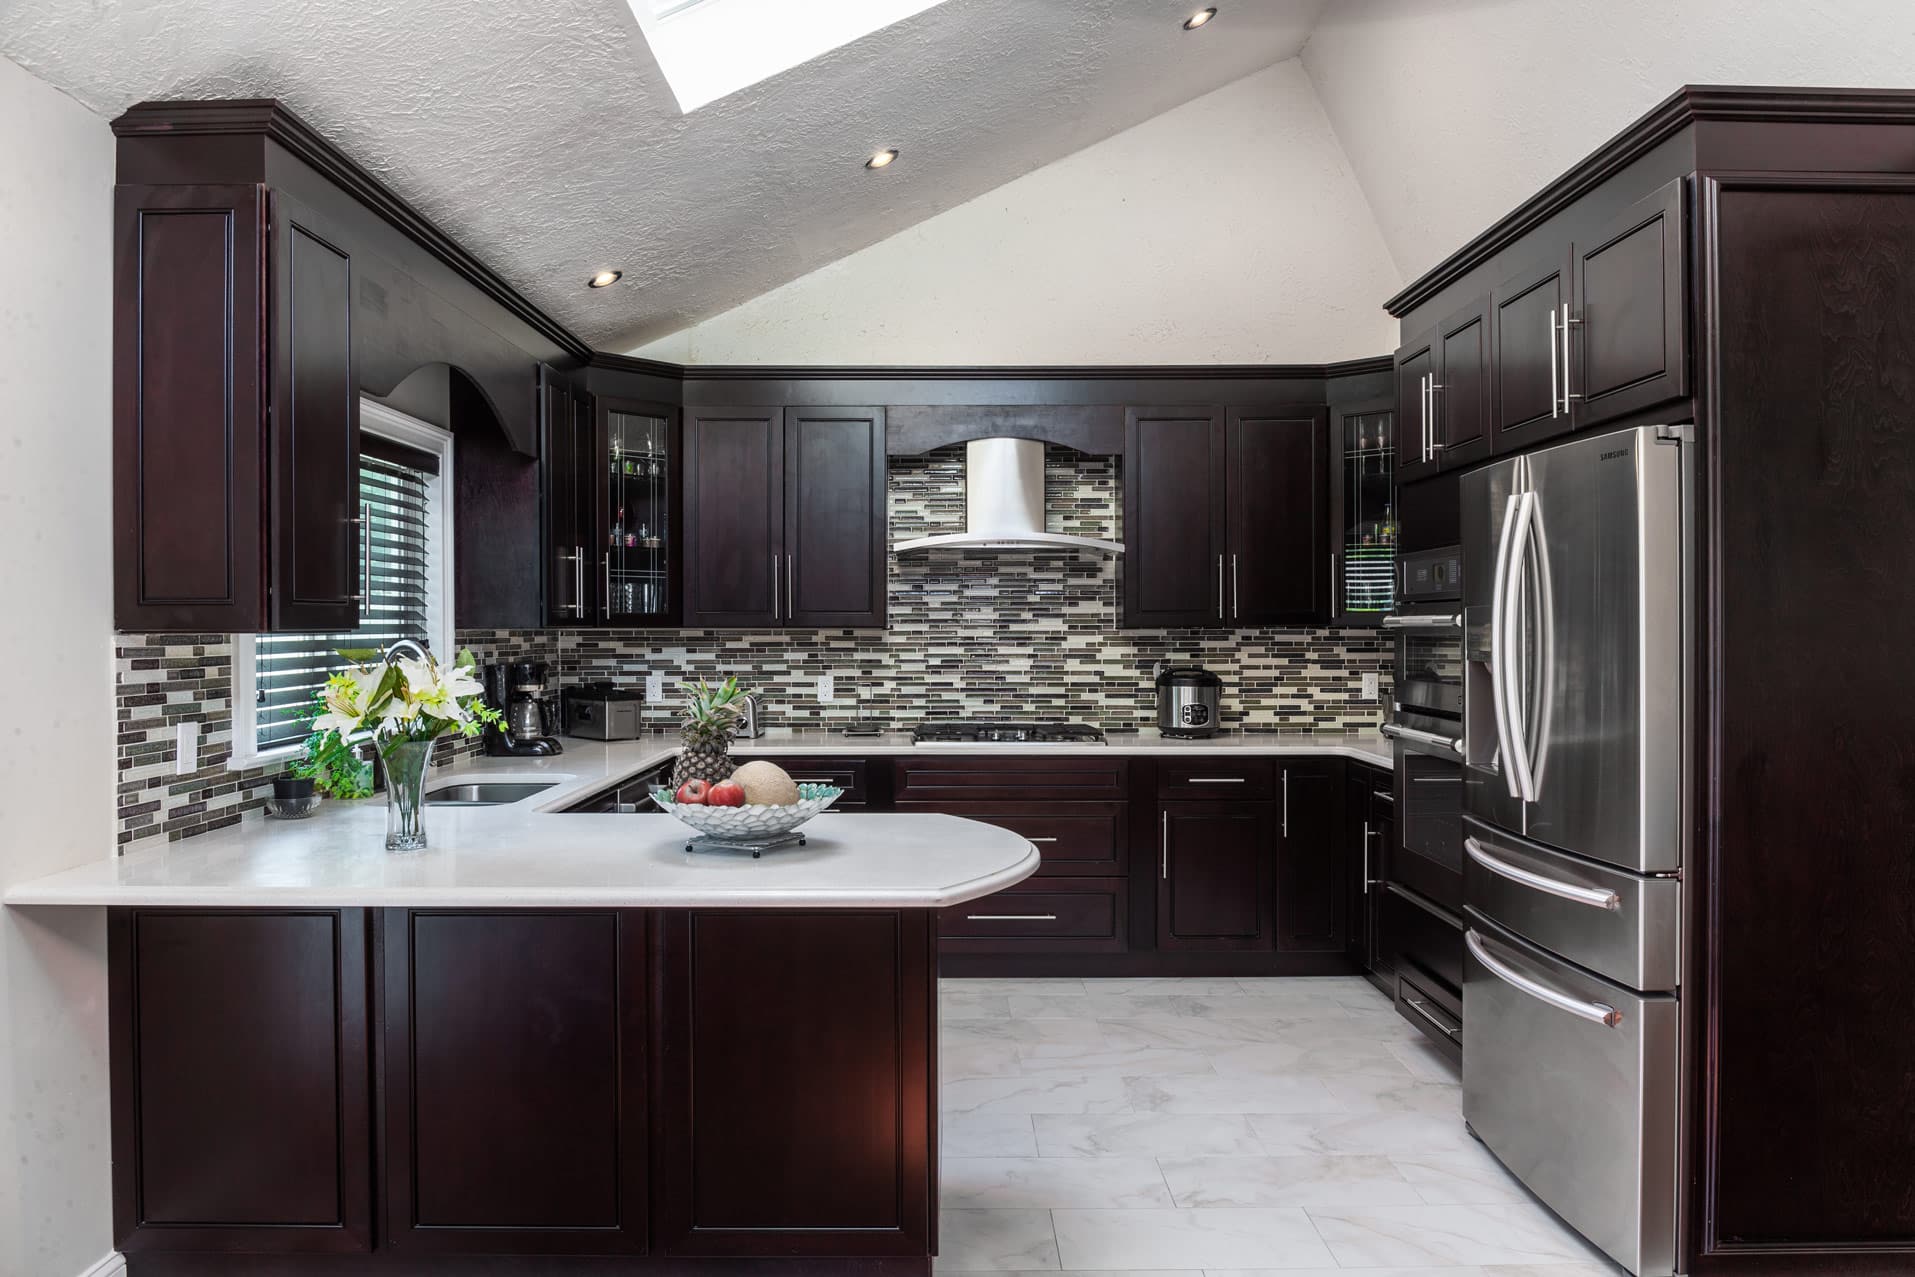 J&K dark brown kitchen cabinets with white countertops